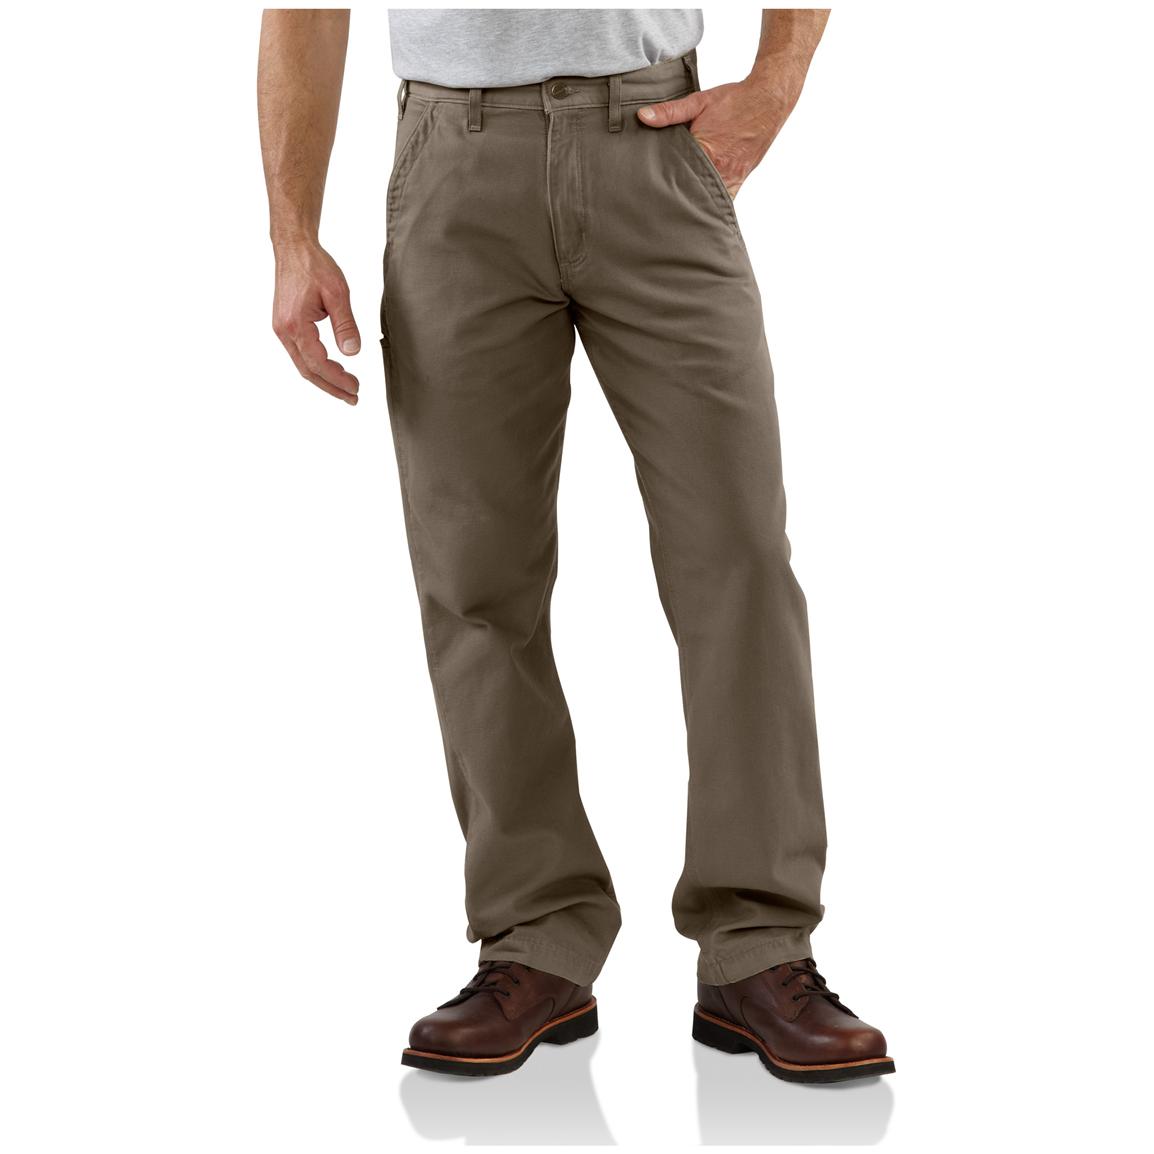 Men's Carhartt® Canvas Khakis - 226920, Jeans & Pants at Sportsman's Guide